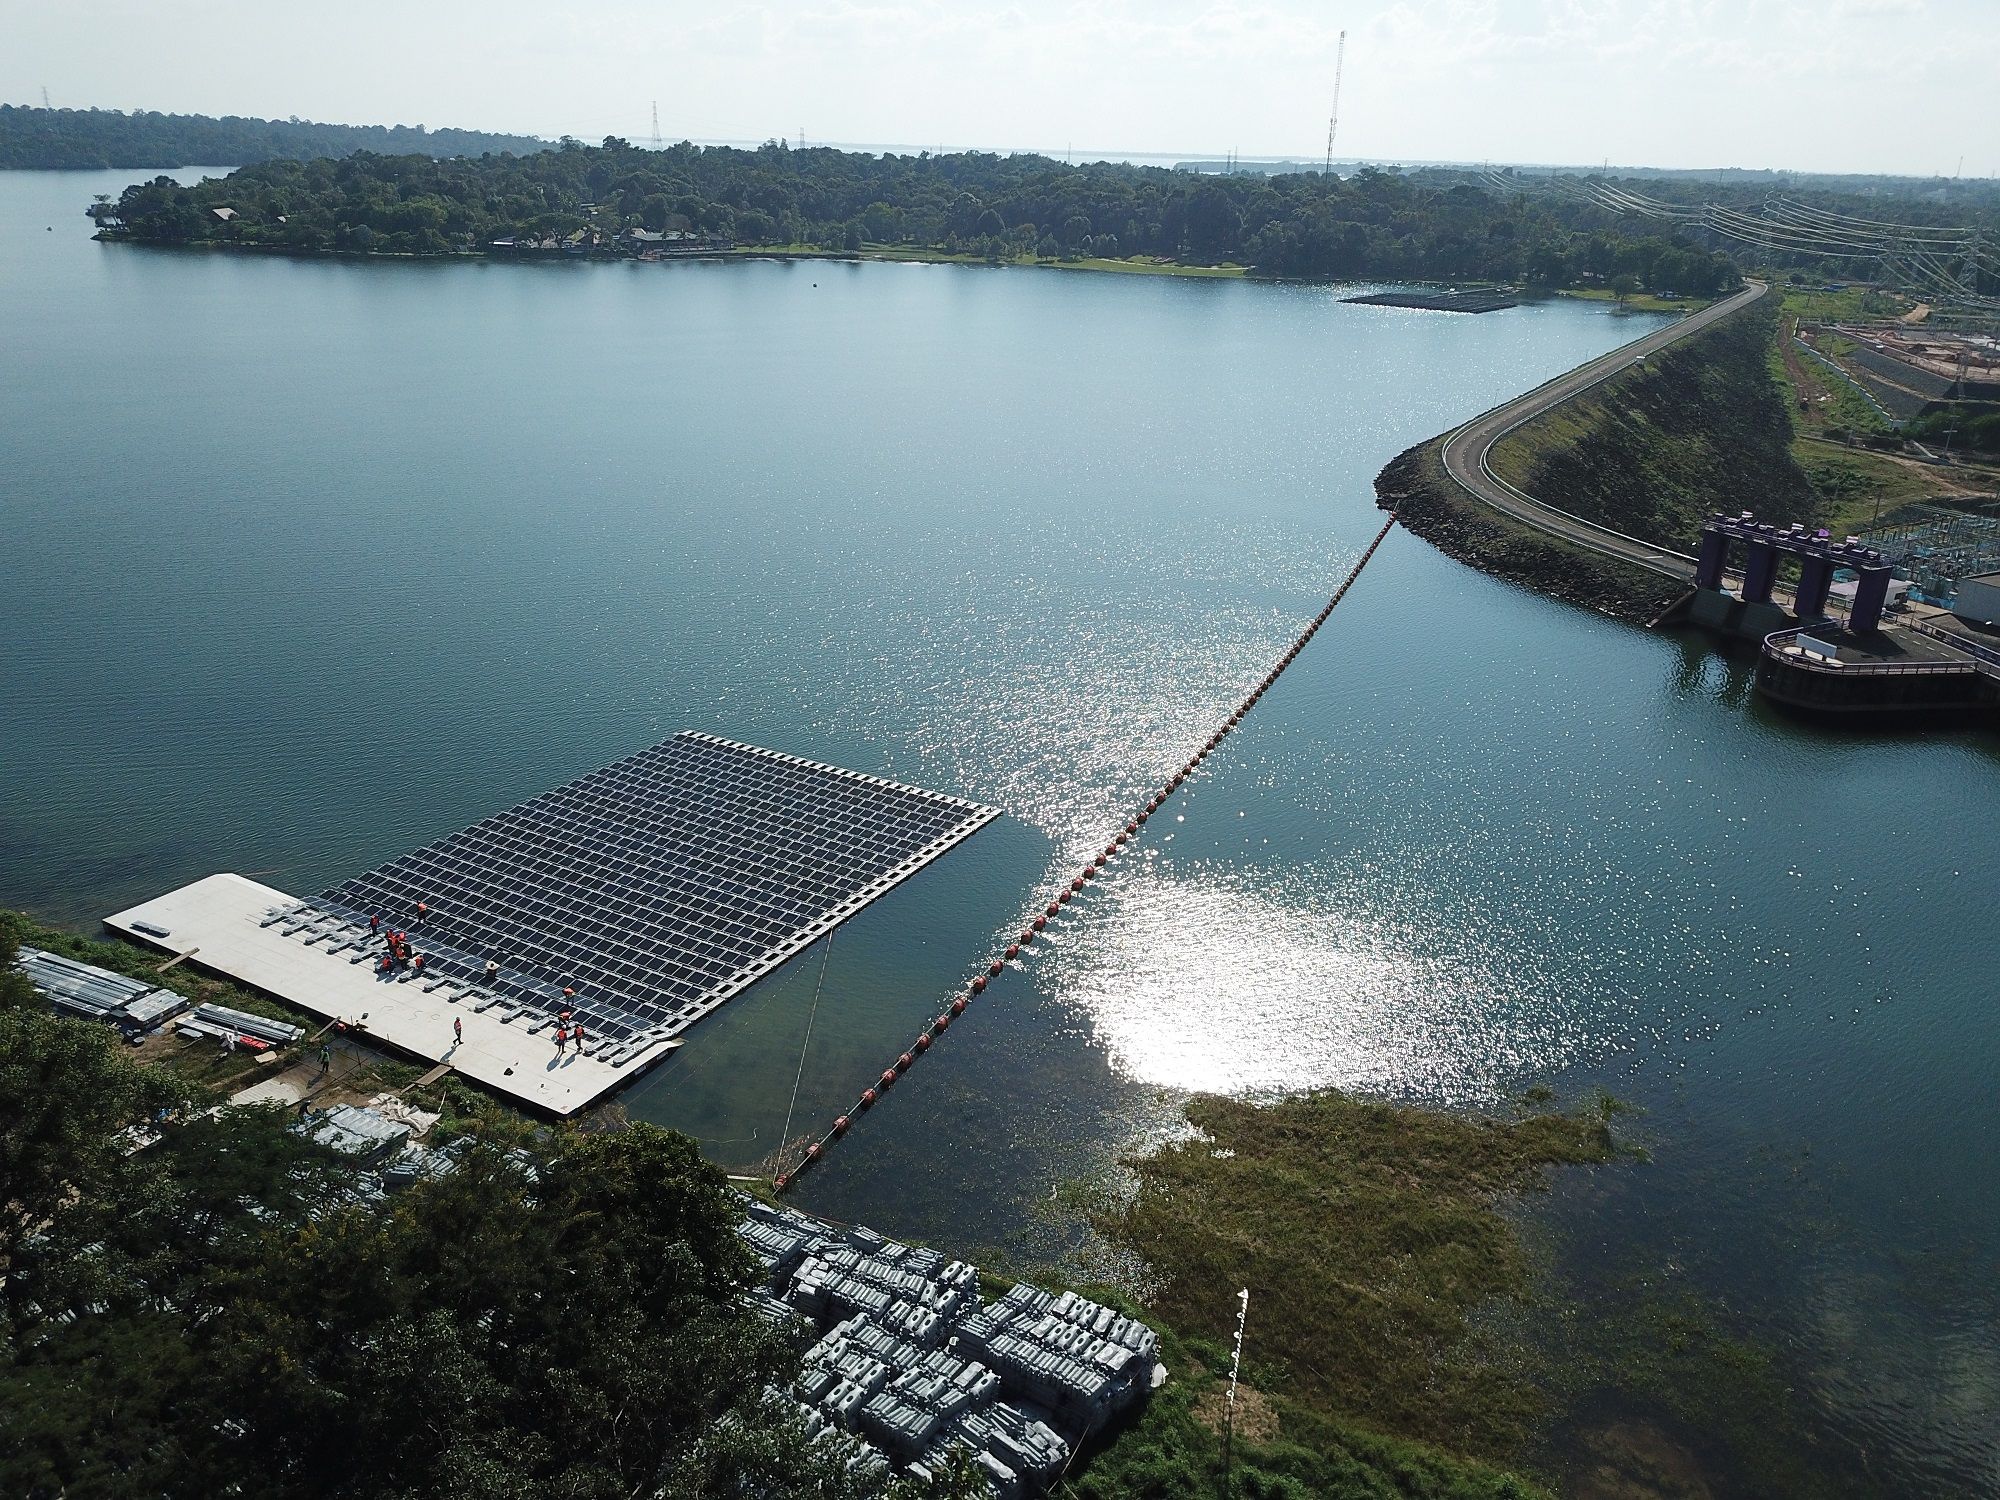 The World’s Largest Hydro-Floating Solar Hybrid